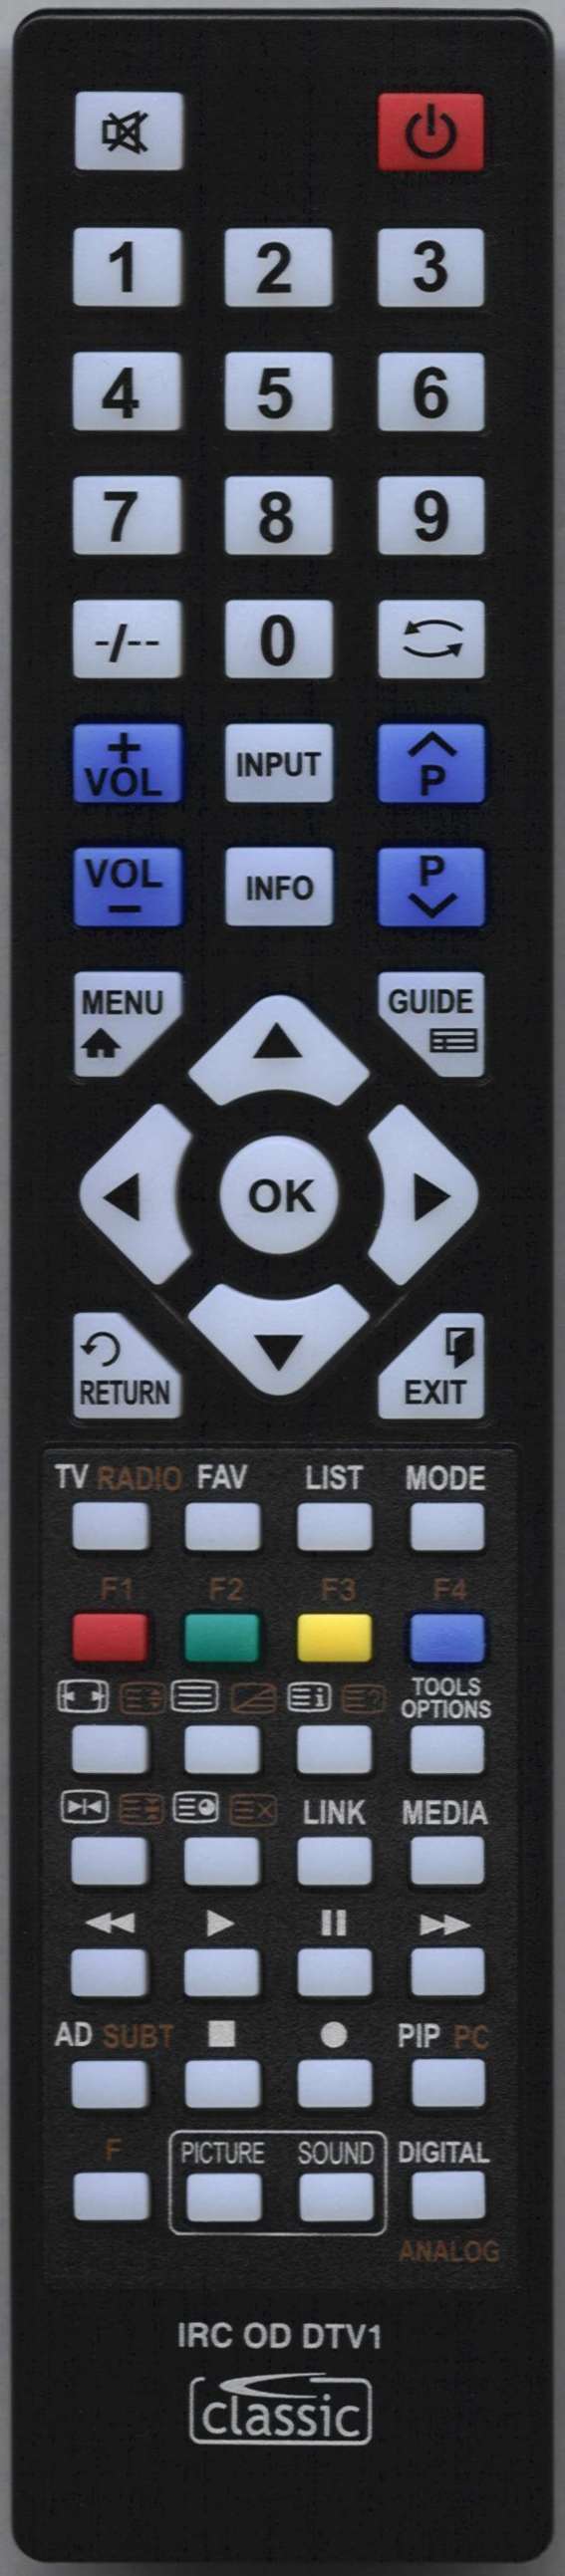 SEIKI SE32HD07UK Remote Control